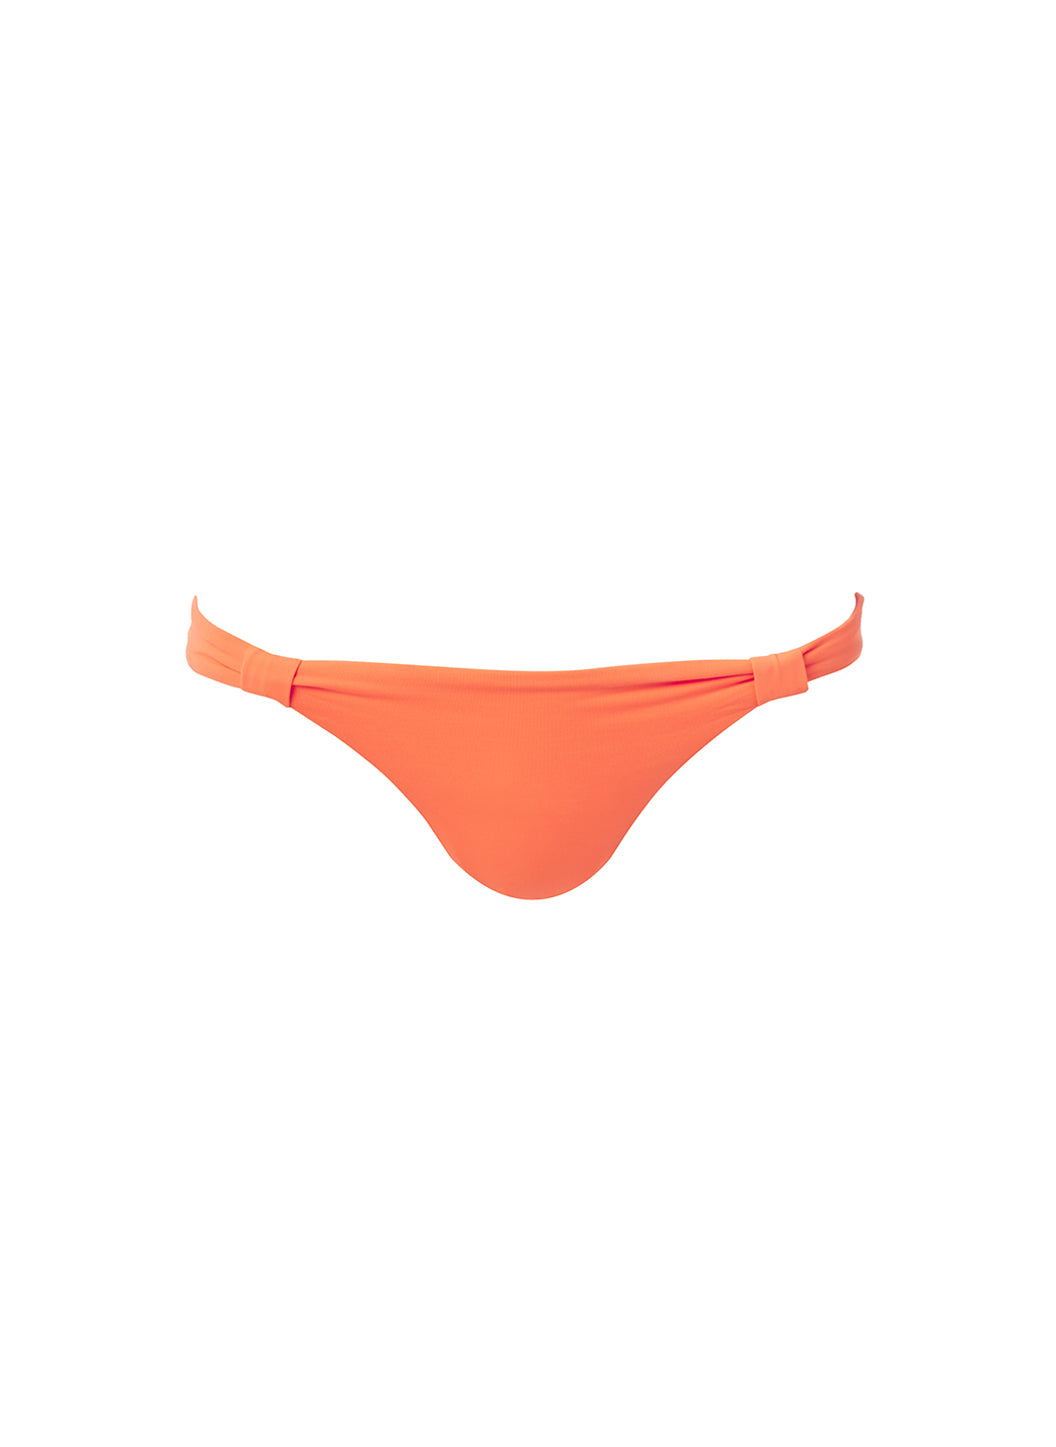 stockholm-orange-bikini-bottom_cutout